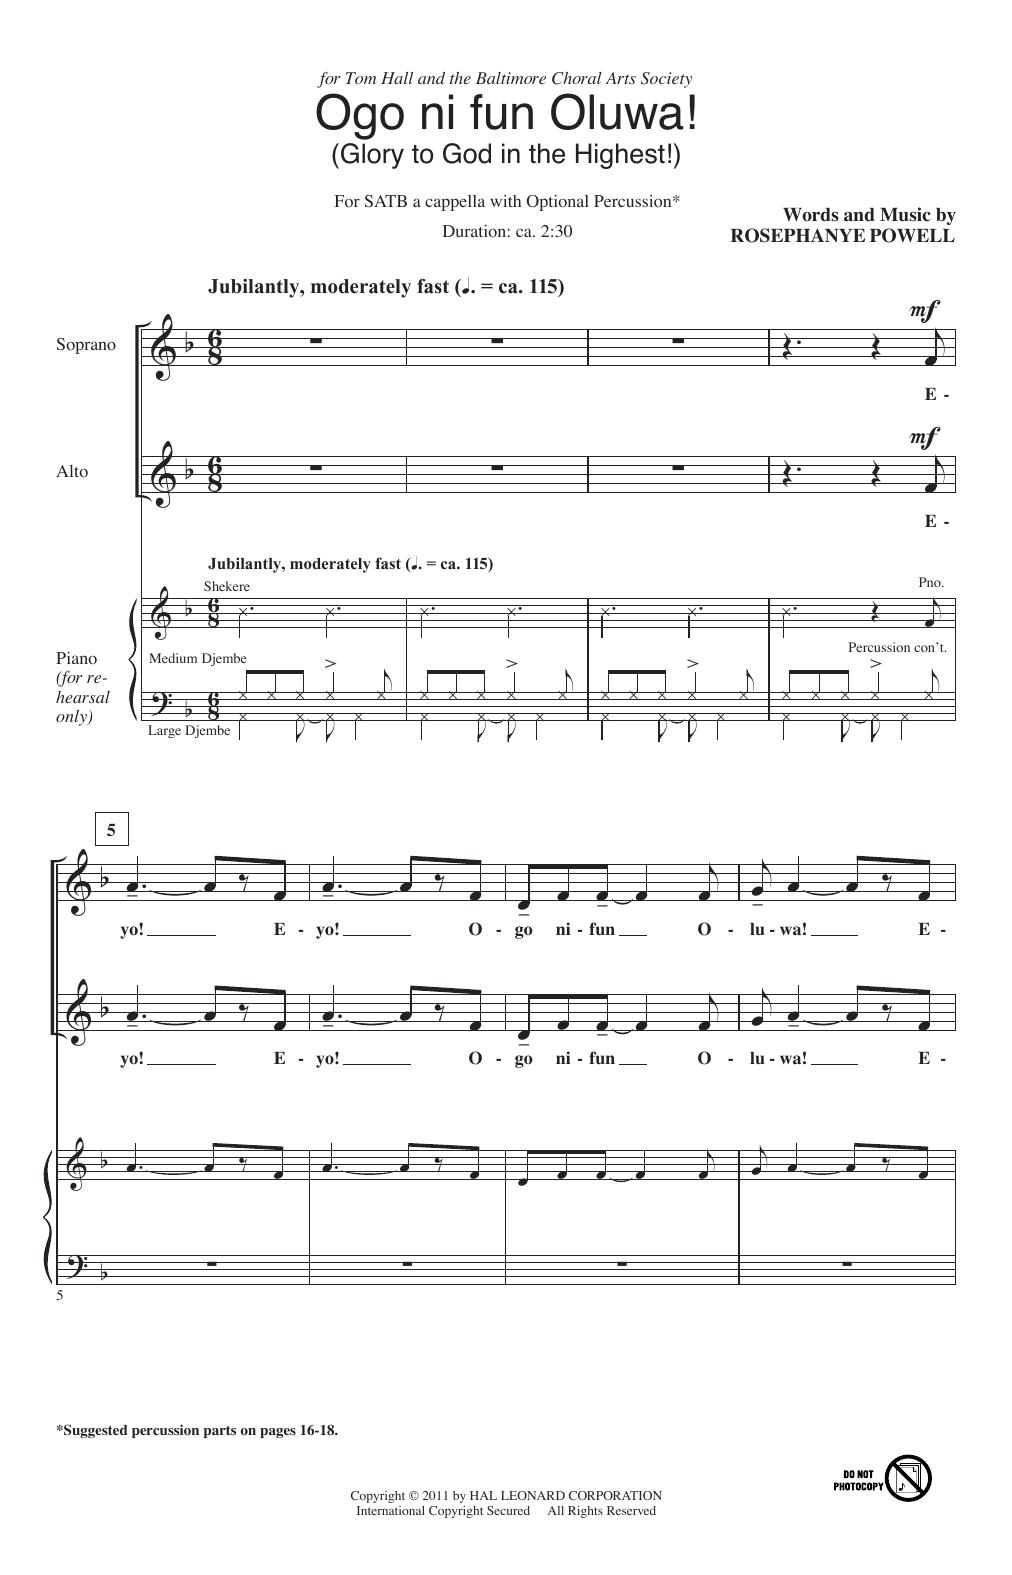 Download Rosephanye Powell Ogo Ni Fun Oluwa! (Glory To God In The Highest!) Sheet Music and learn how to play SATB PDF digital score in minutes